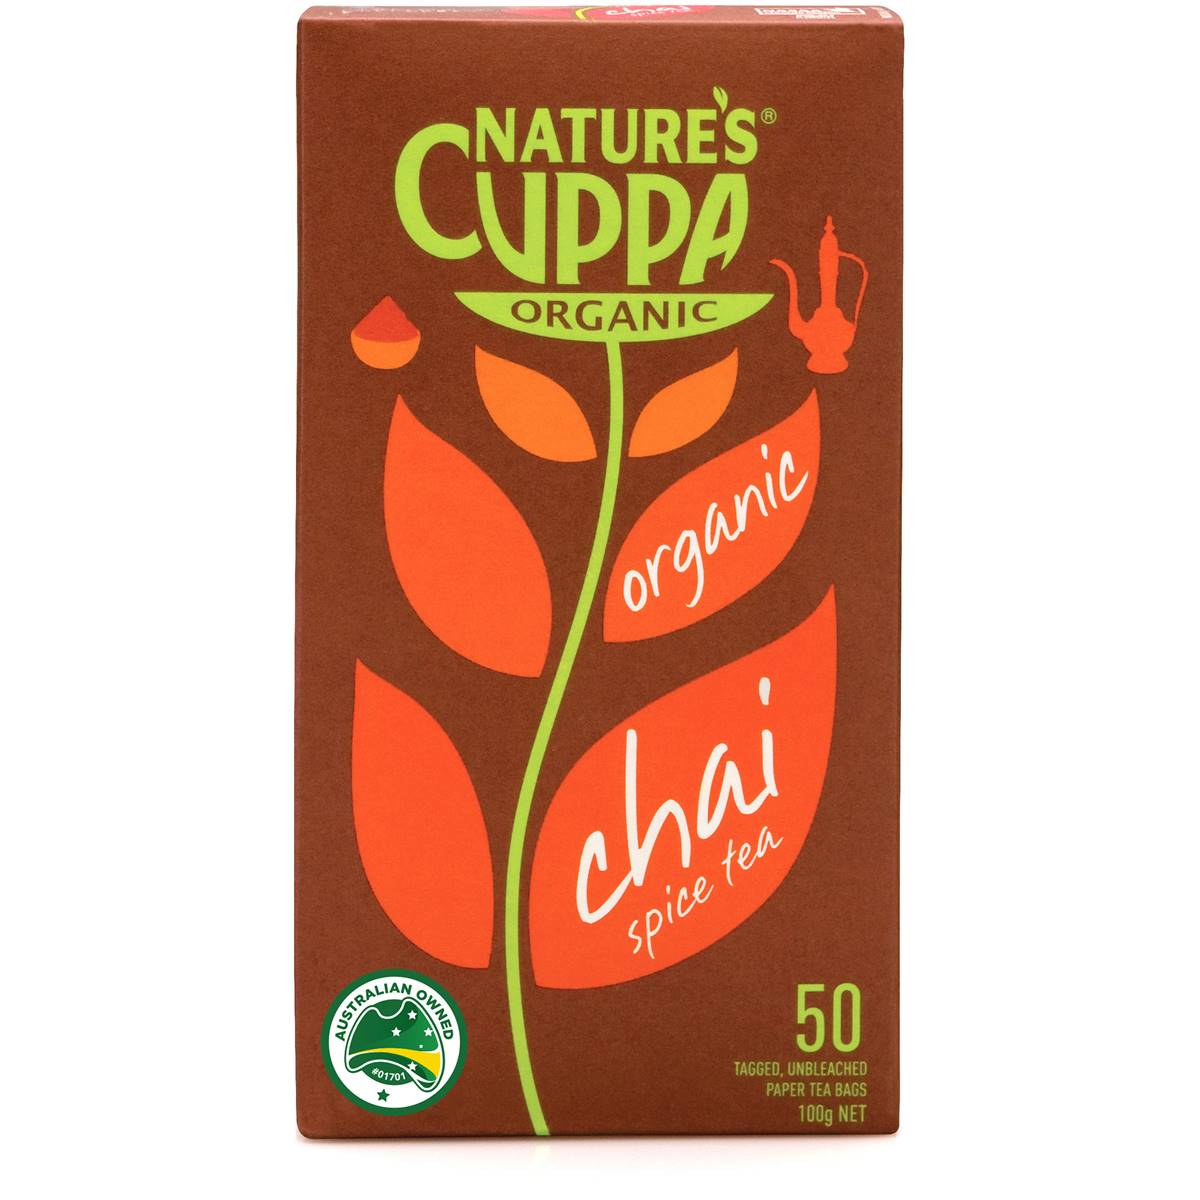 Calories in Nature's Cuppa Organic Spice Chai Tea Bags